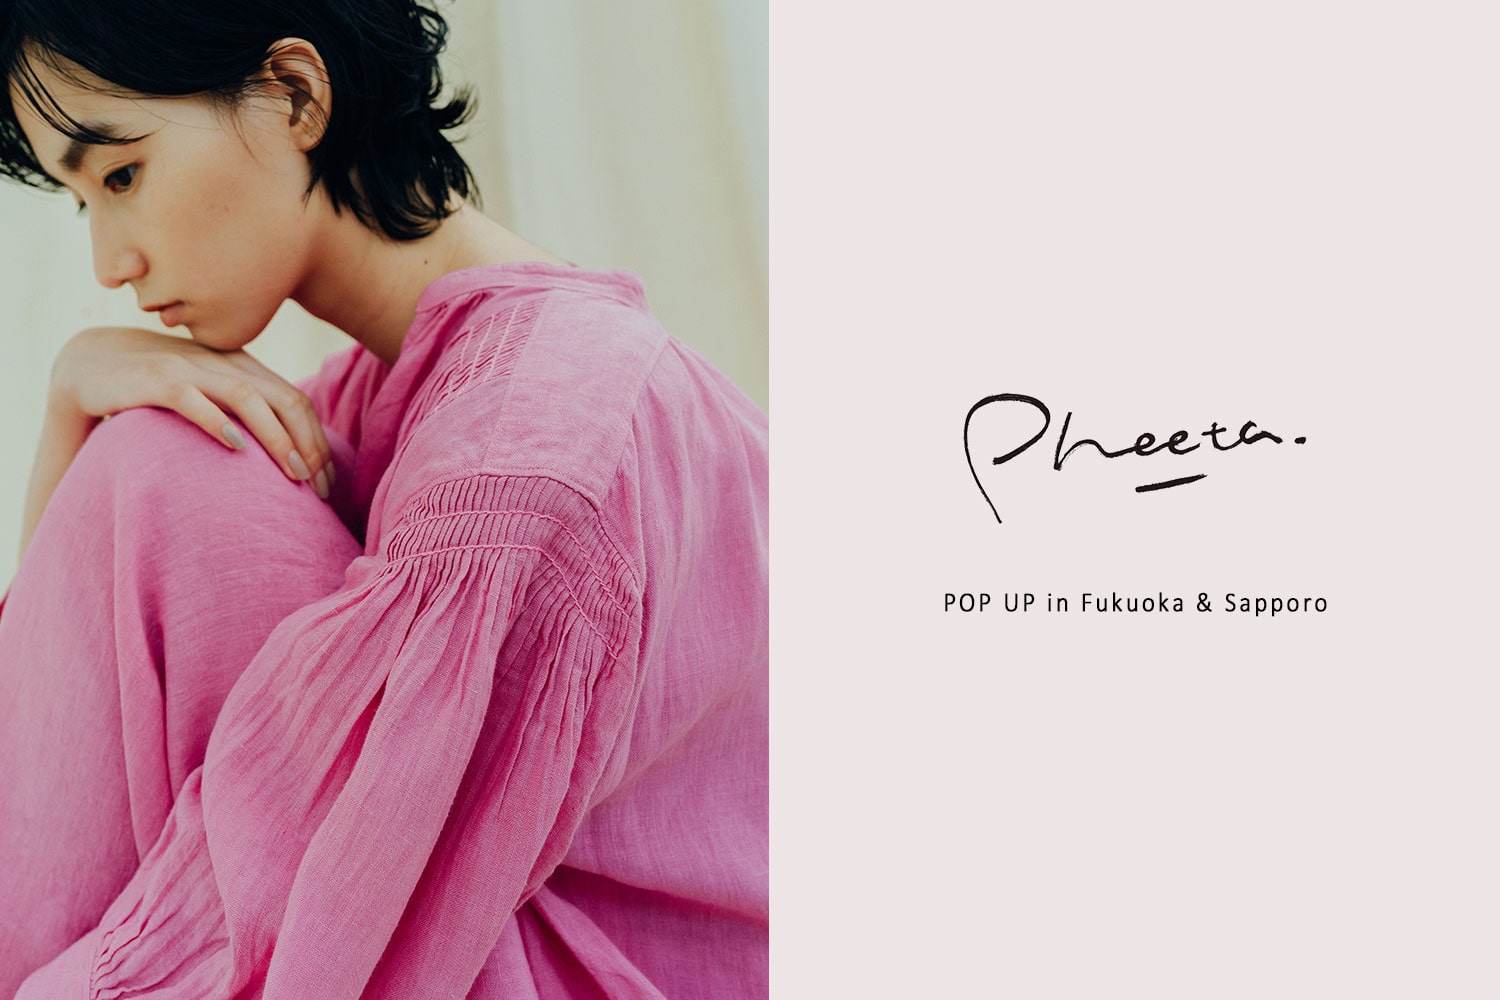 Pheeta - POP UP